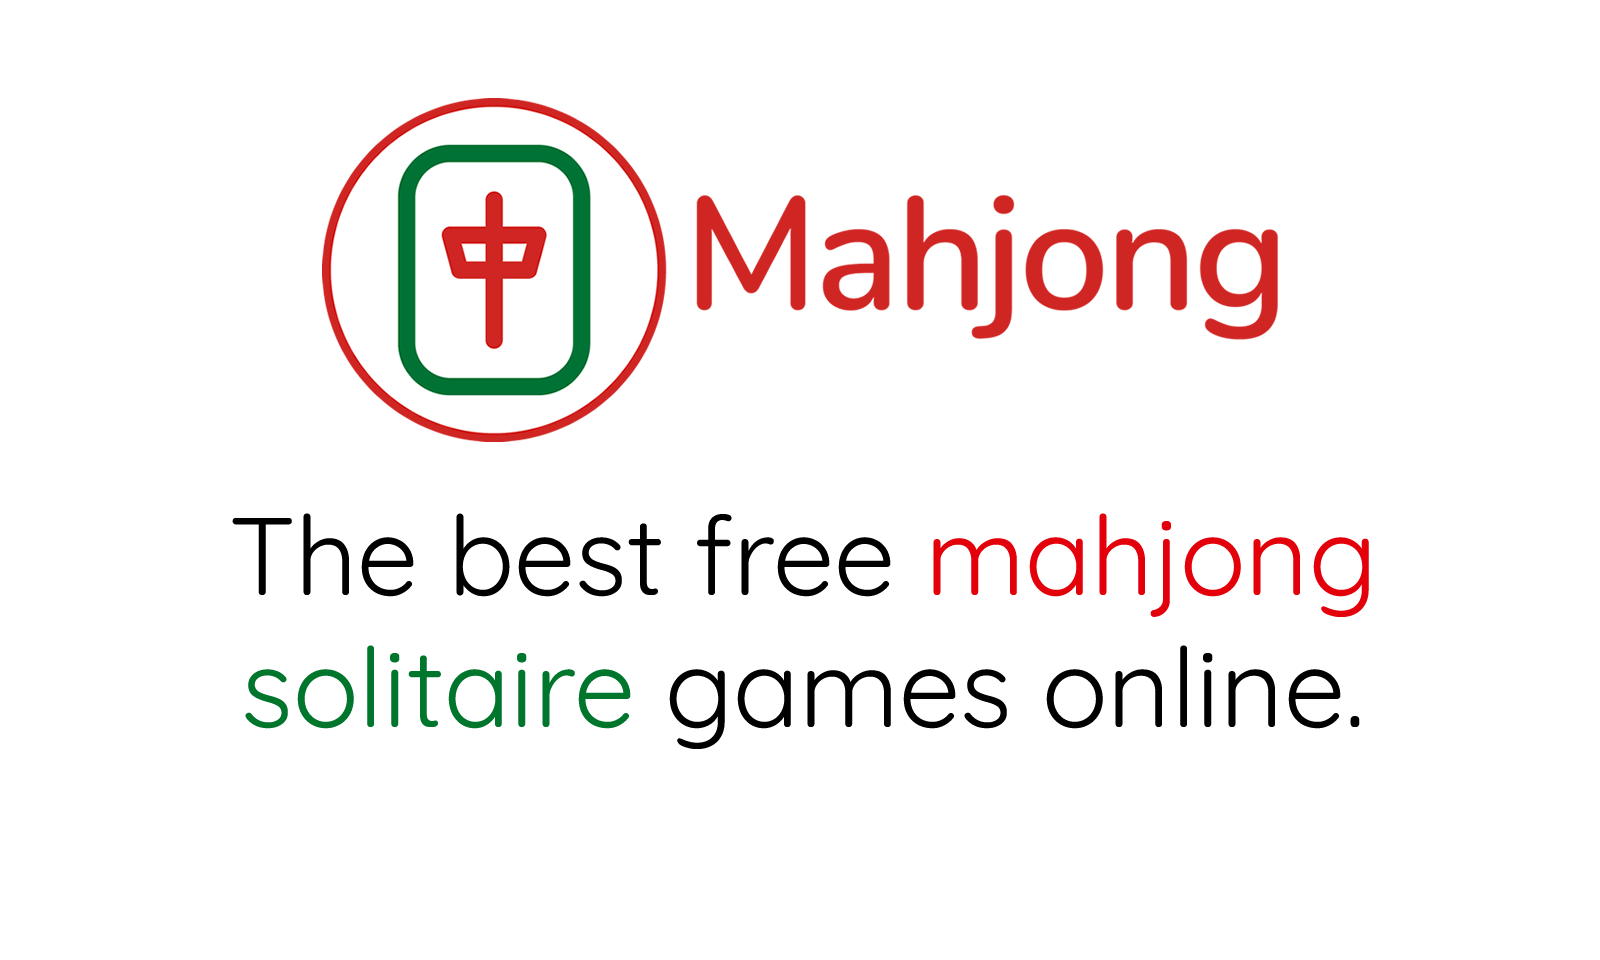 Mahjong Tower  Play Tower Mahjong full screen online free